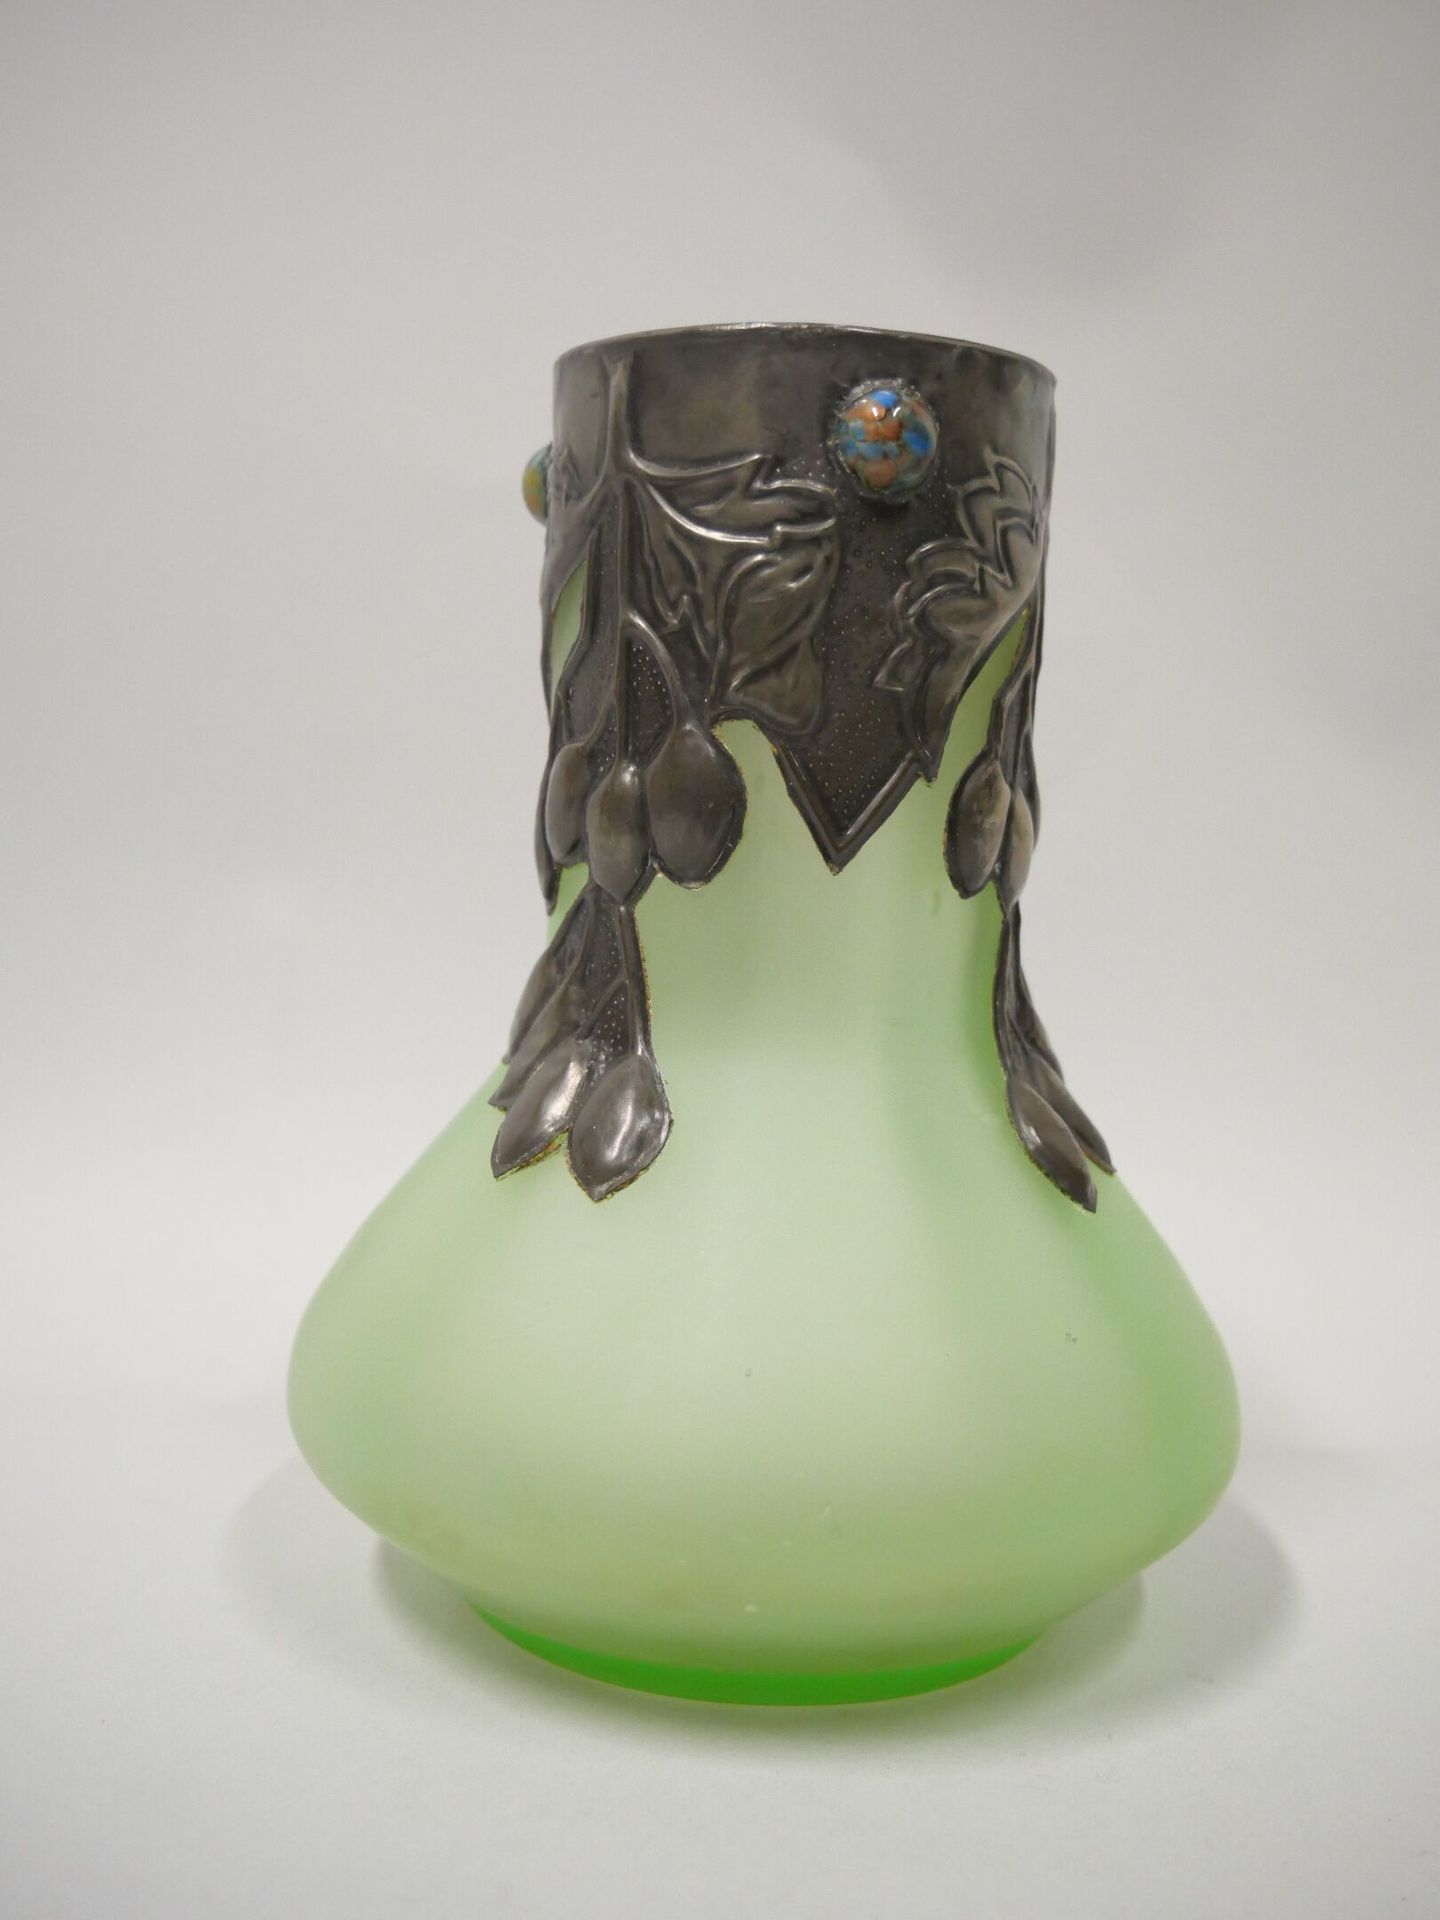 Null 浅绿色着色的不透明玻璃花瓶，装饰有植物图案的锡器和多色玻璃珠。

新艺术主义风格。

高度：15.5厘米





拍卖会将于2022年12月16日（&hellip;